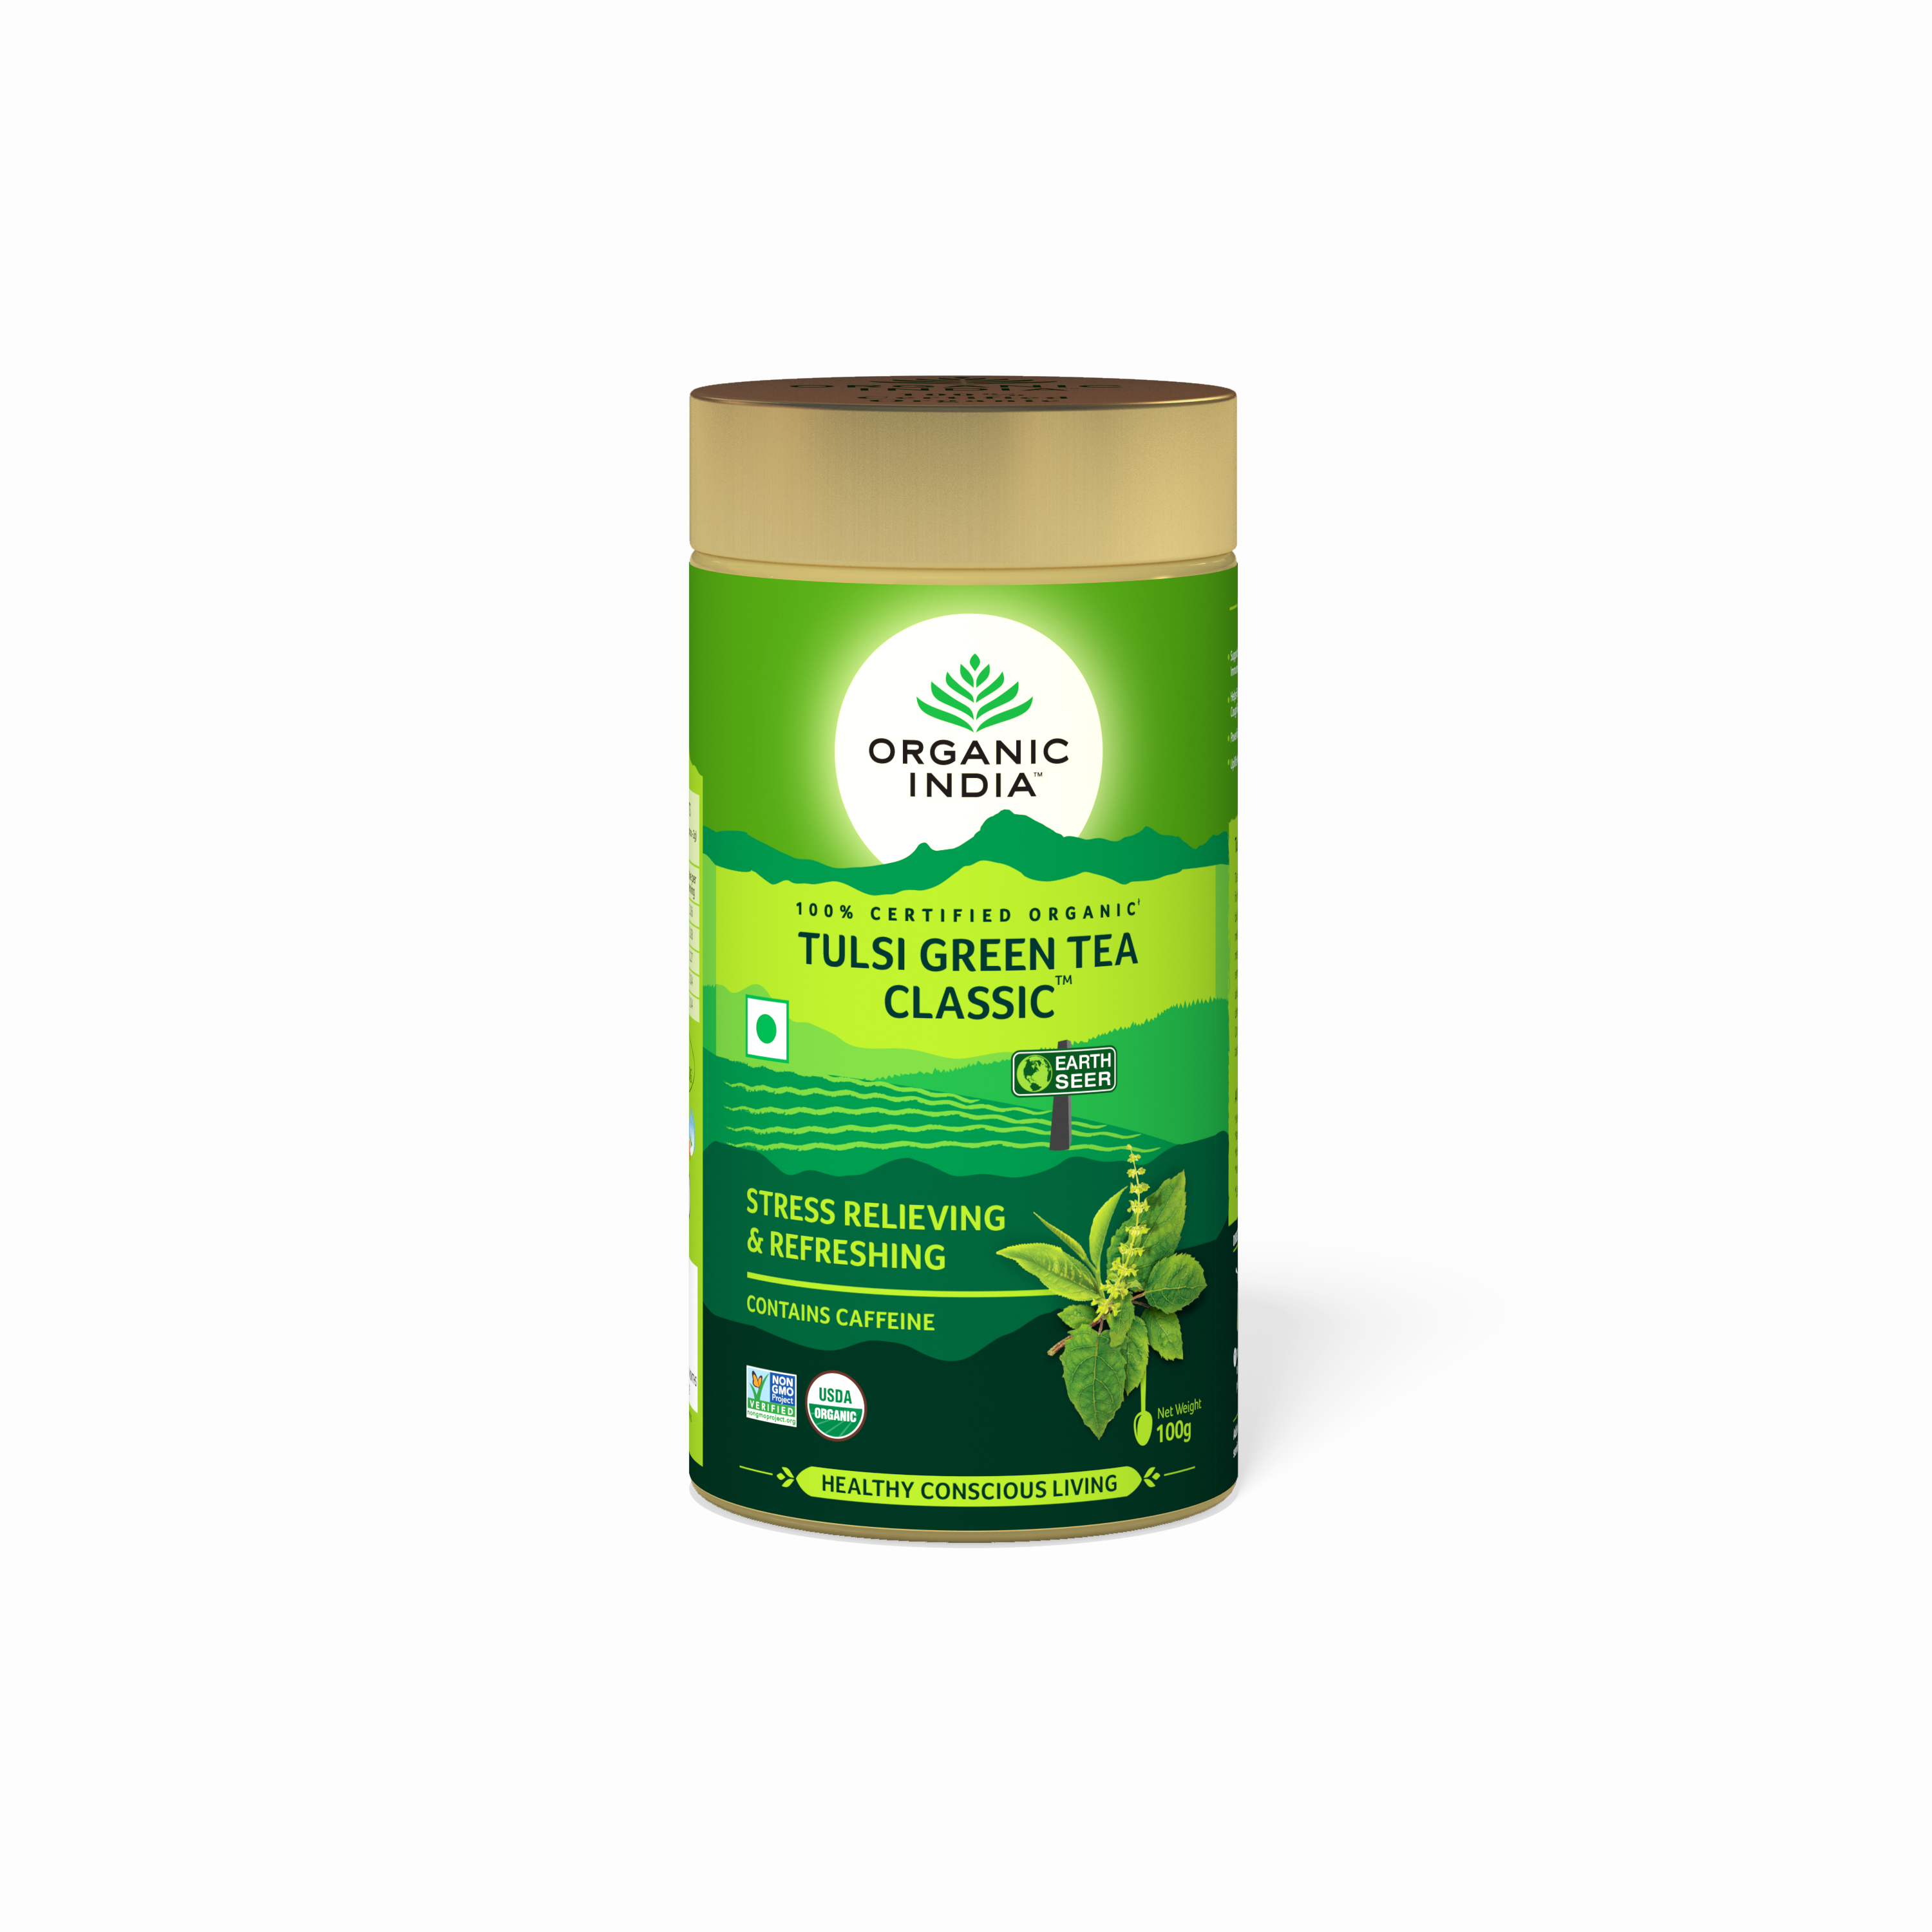 Buy Organic India Tulsi Green Tea Classic Tin at Best Price Online